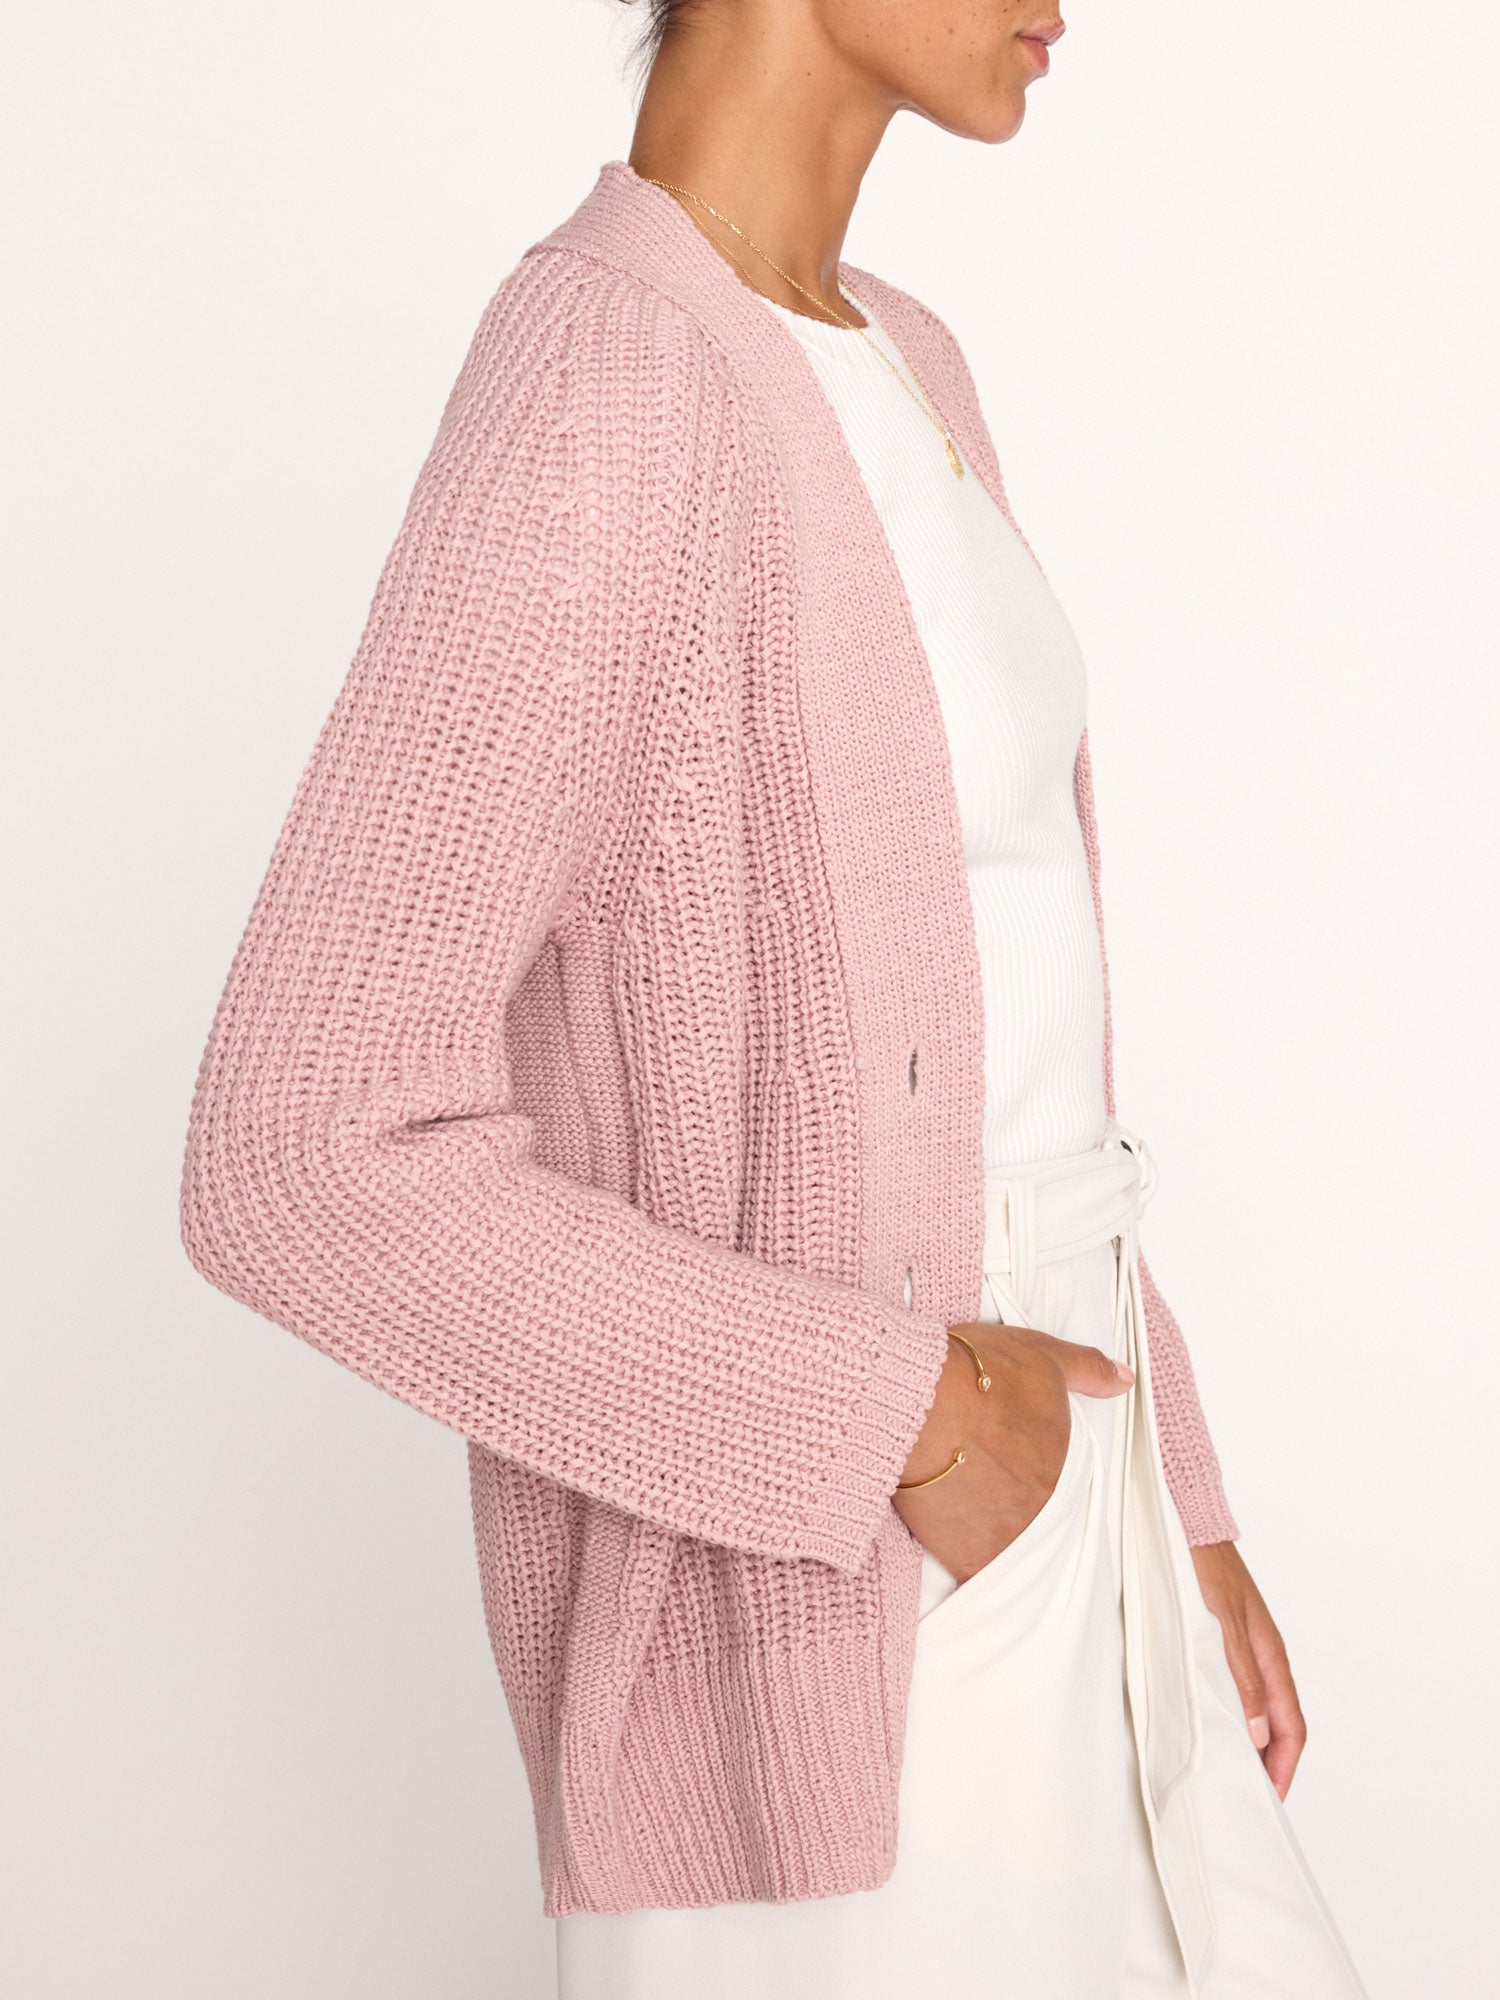 Jen linen cotton pink cardigan sweater side view 